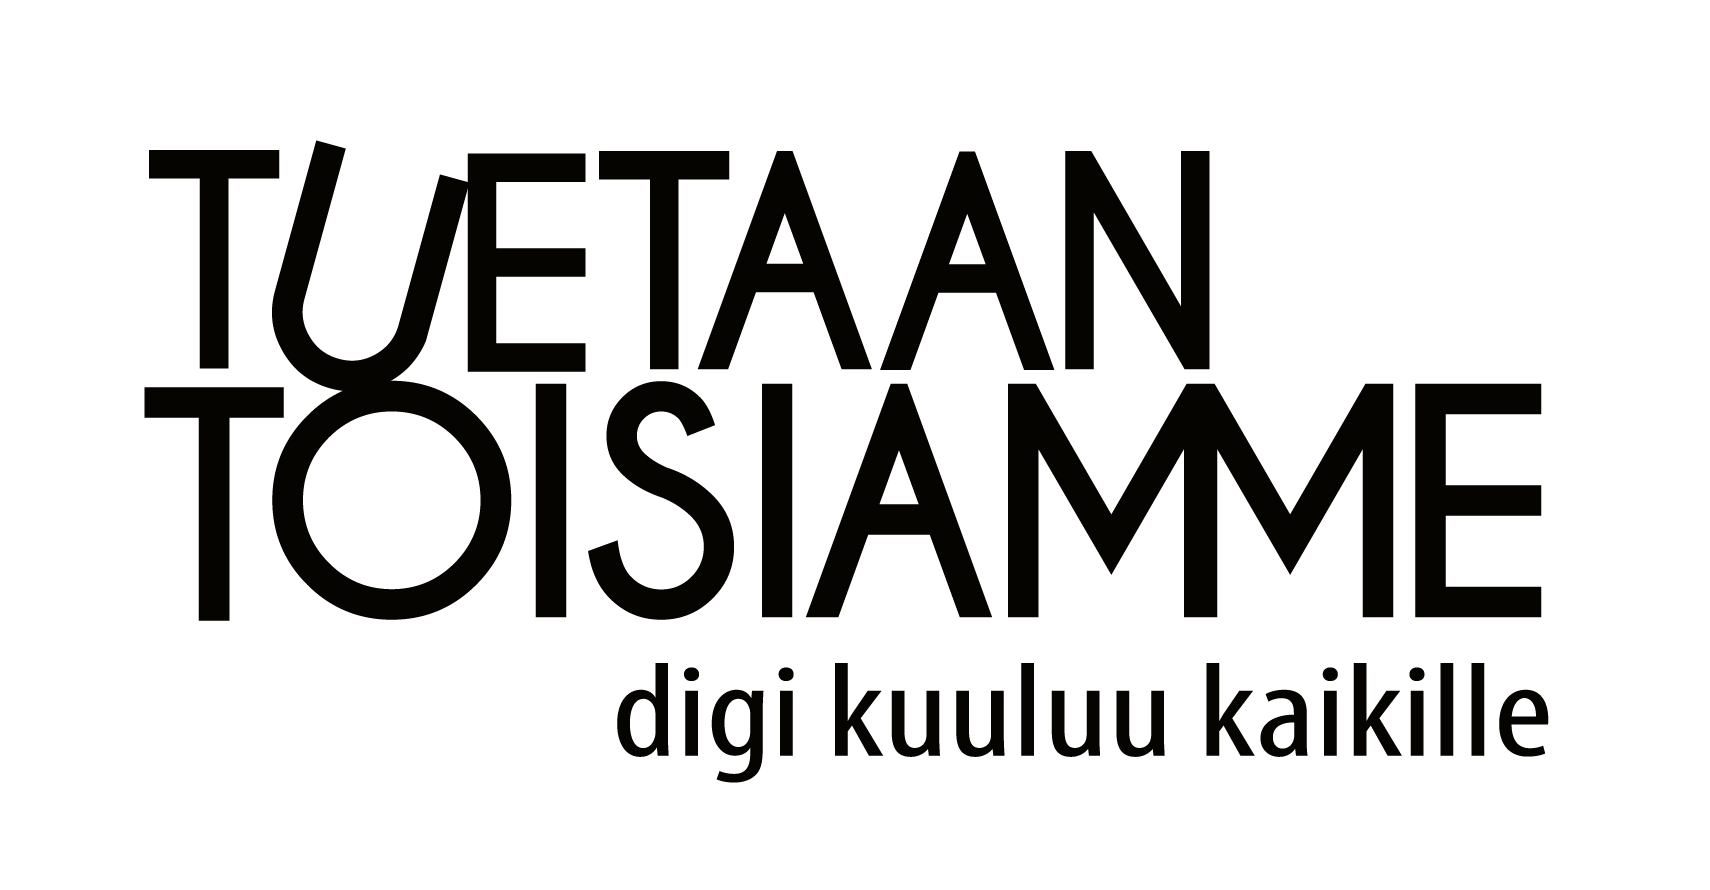 digihanke-logo-musta-01 (1)